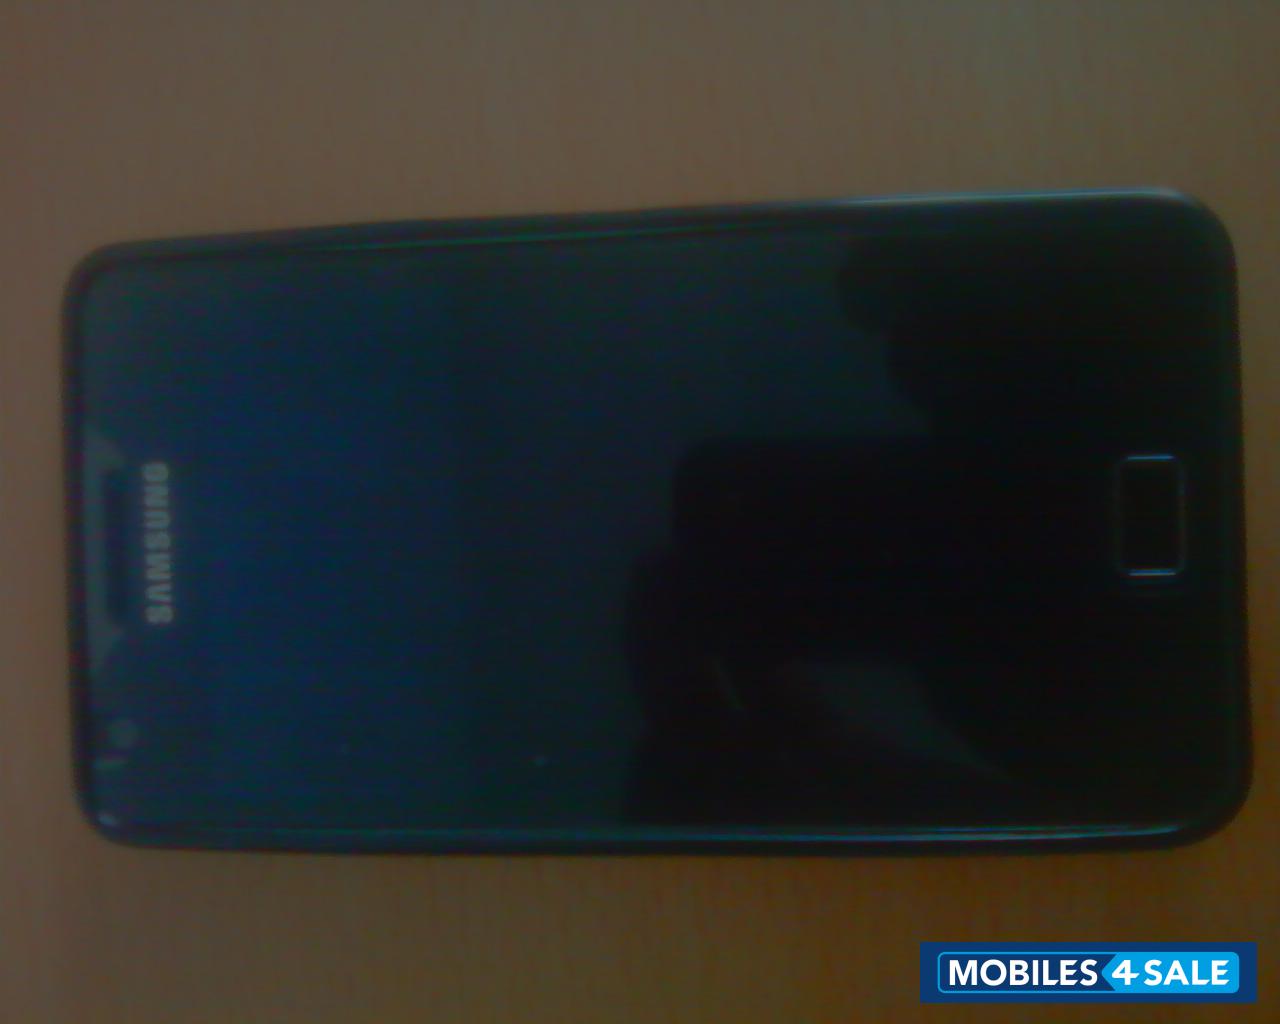 Samsung Galaxy S2 I9100G